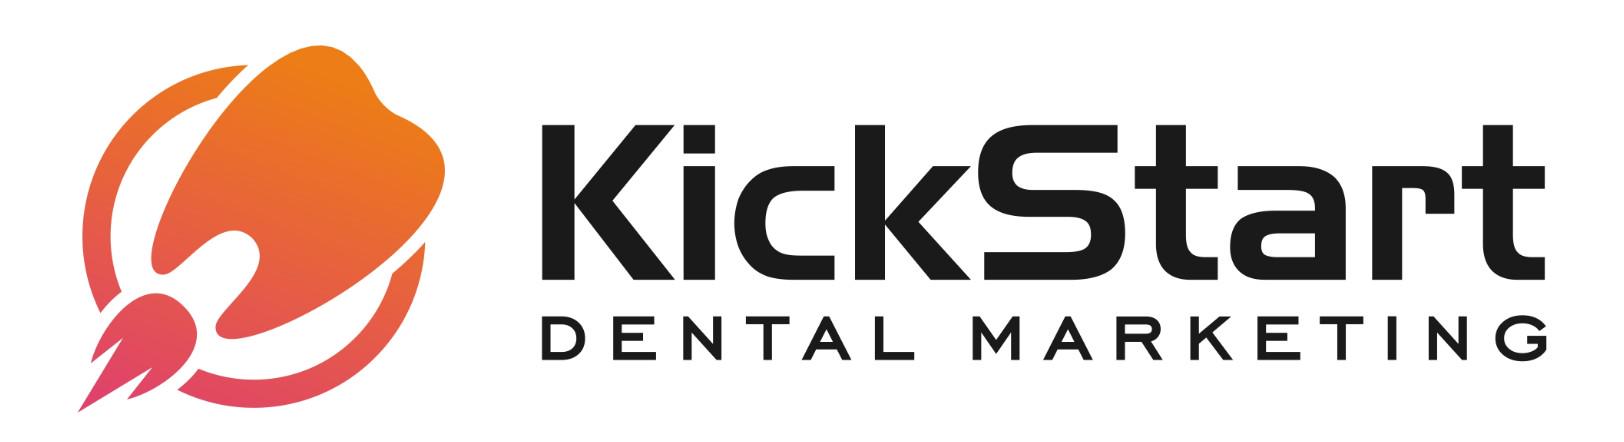 KickStart Dental Marketing profile on Qualified.One